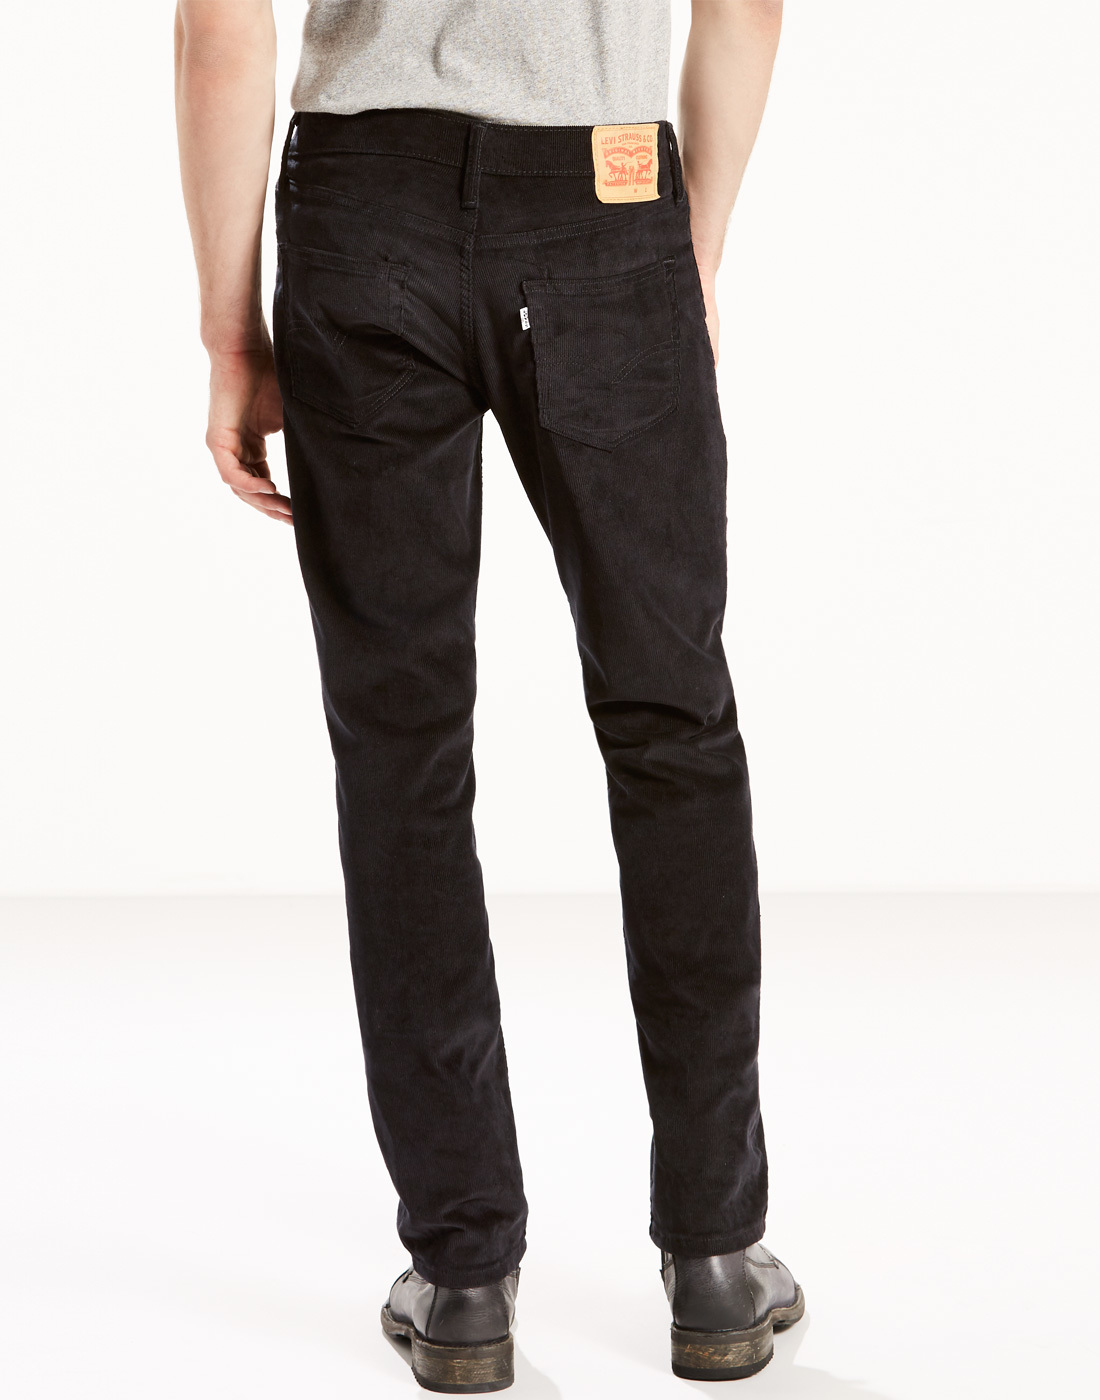 LEVI'S® 511 Retro Mod 1960s Mens Slim Fit Cord Jeans in Black